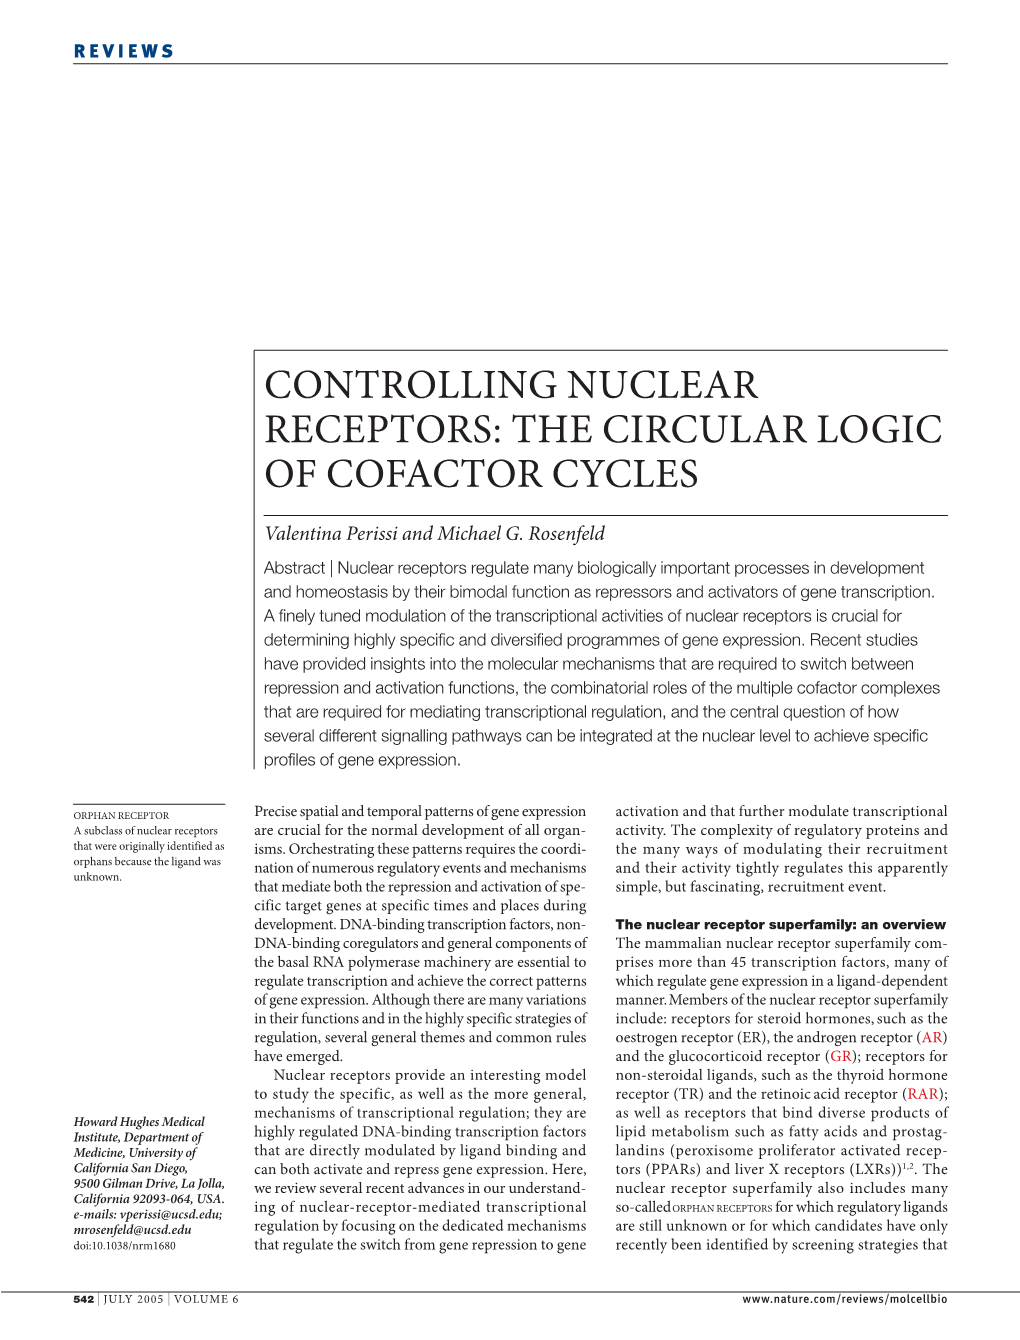 Controlling Nuclear Receptors: the Circular Logic of Cofactor Cycles